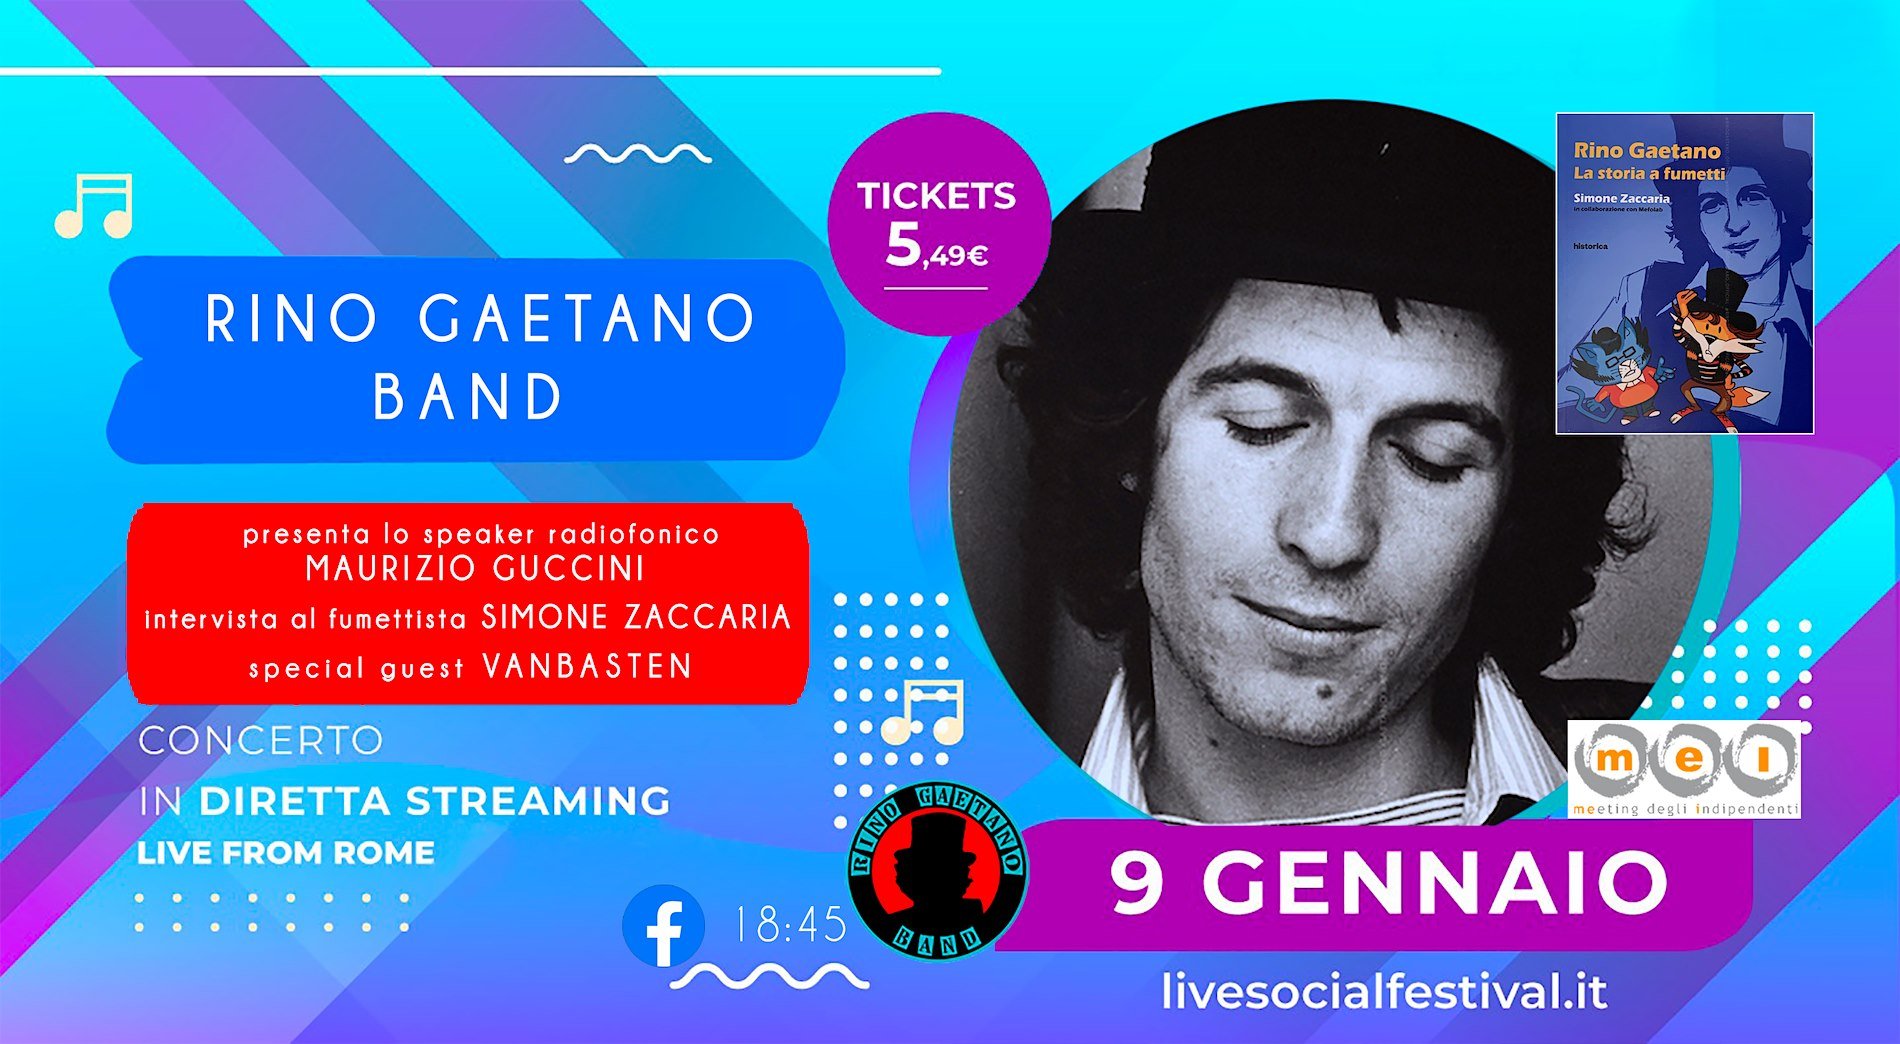 Rino Gaetano Band, live in diretta streaming